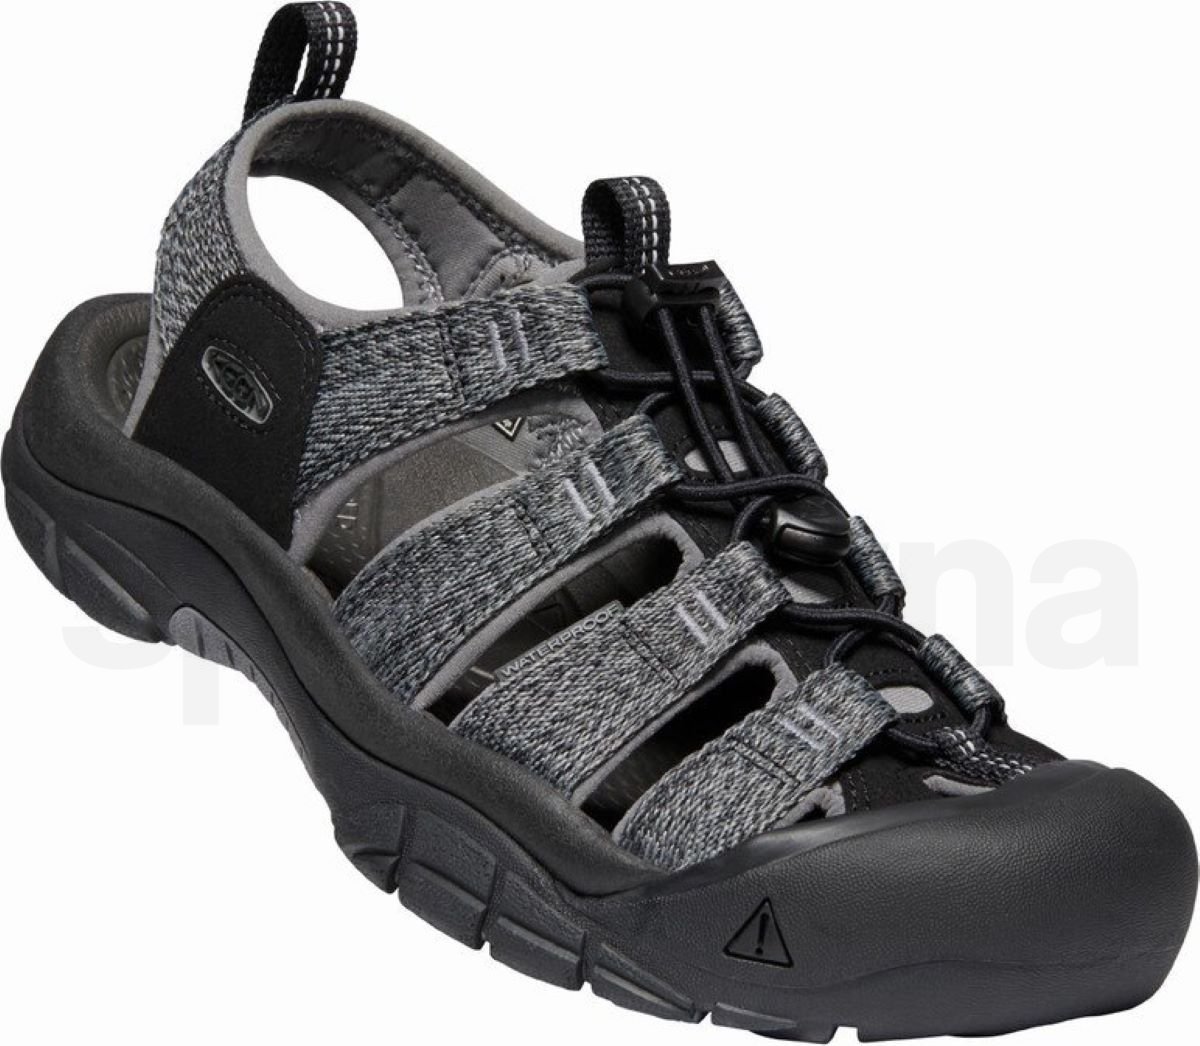 Obuv - sandály Keen Newport H2 M - šedá/černá